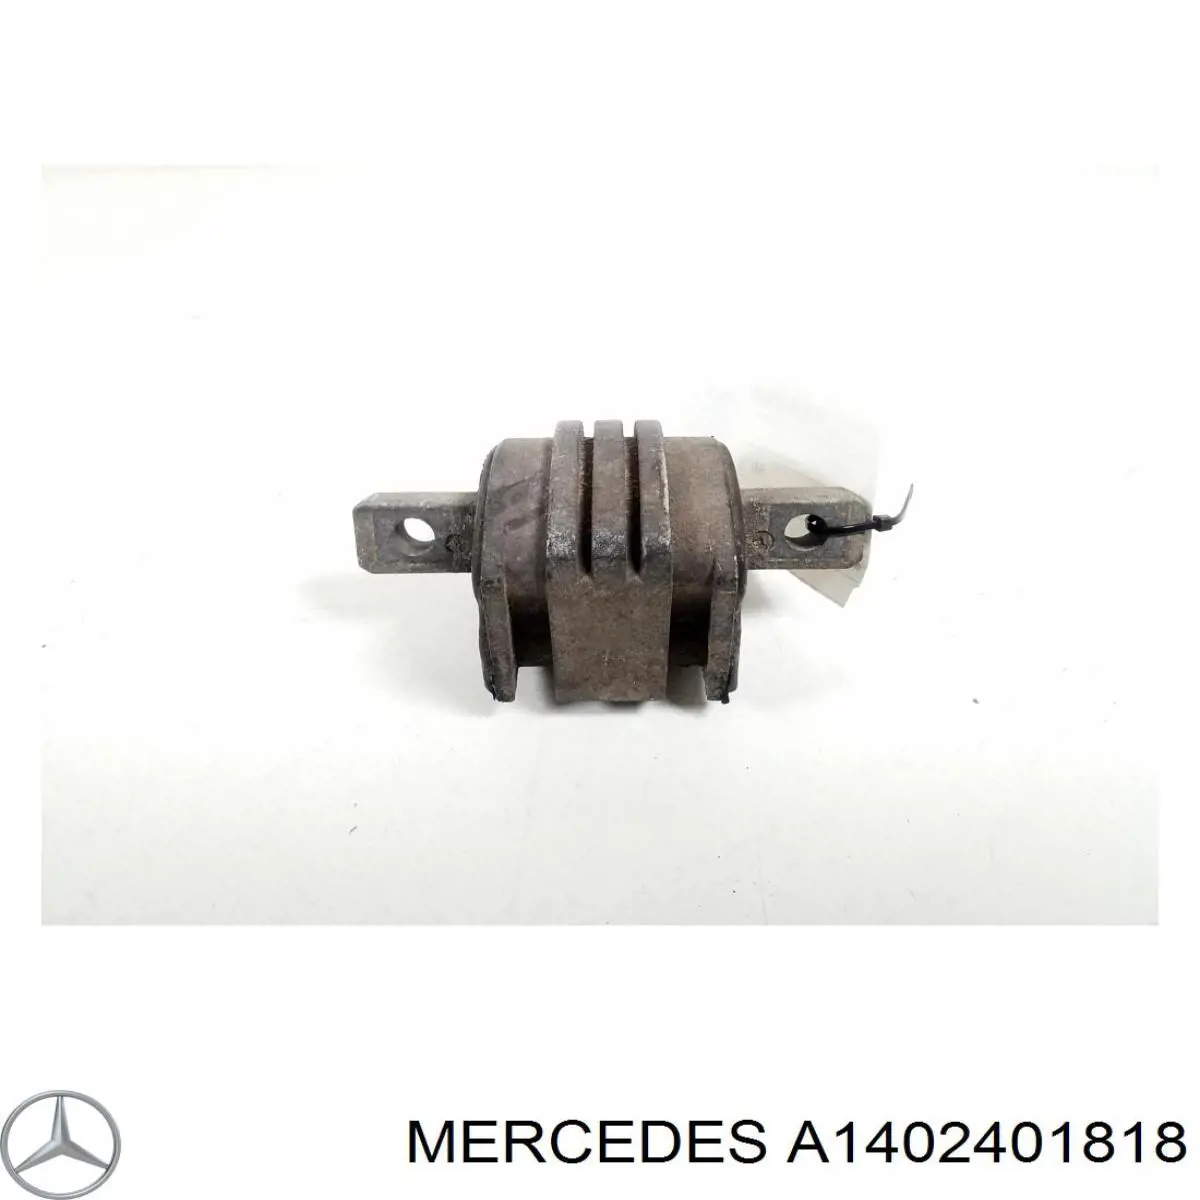 A1402401818 Mercedes подушка трансмиссии (опора коробки передач)